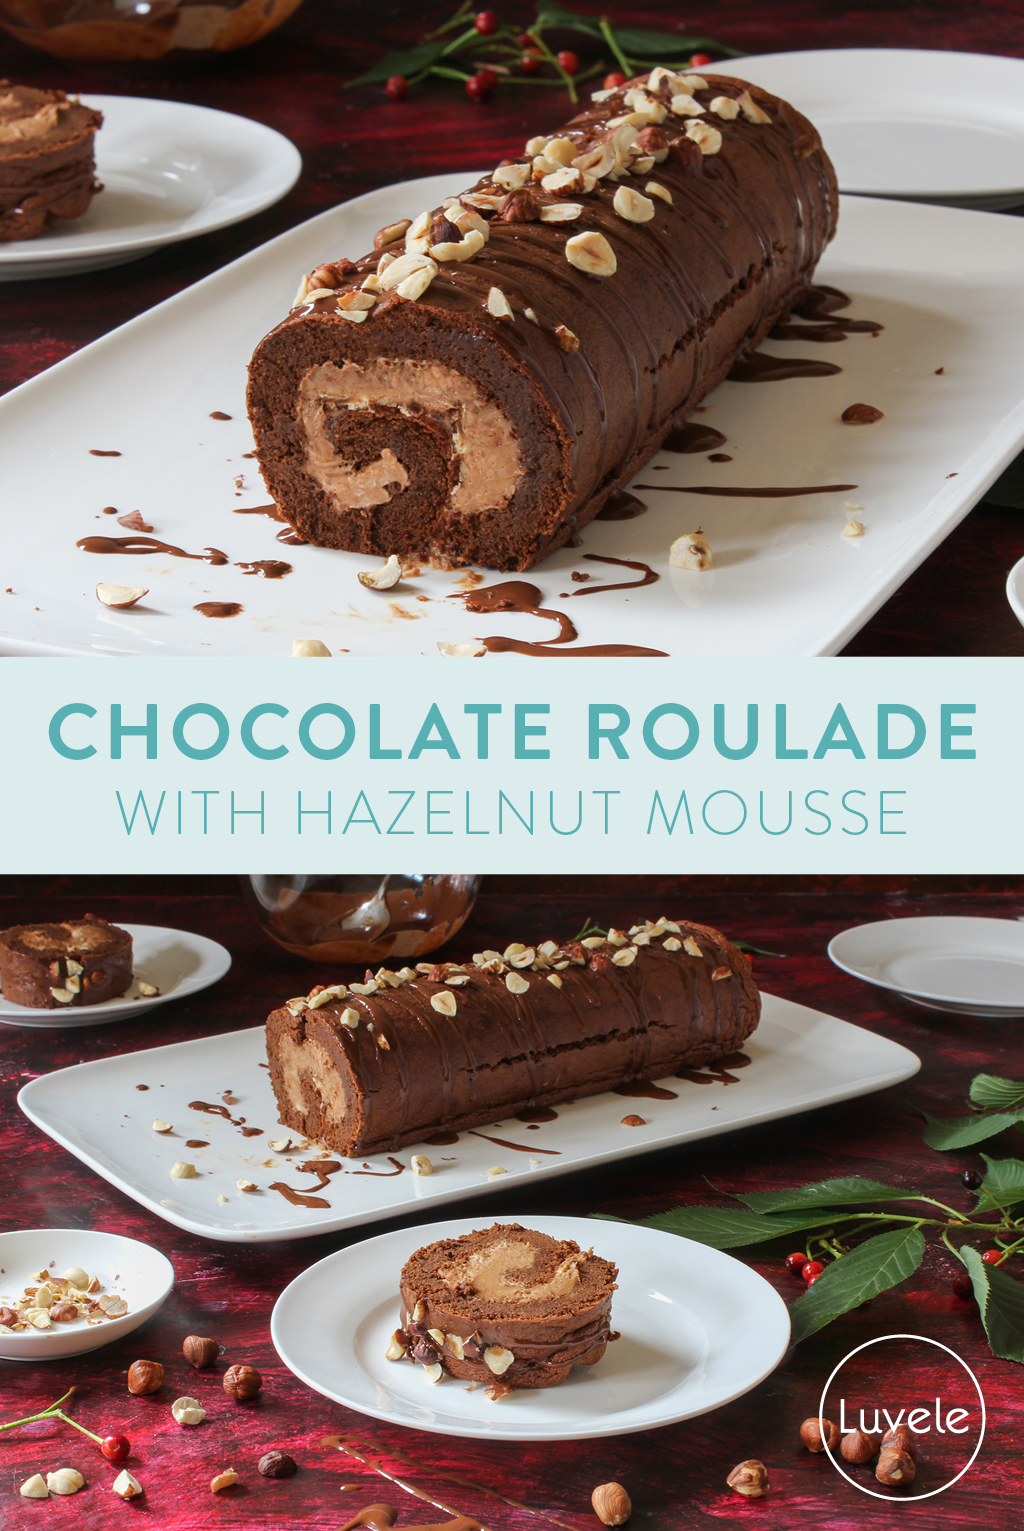 Chocolate roulade recipe